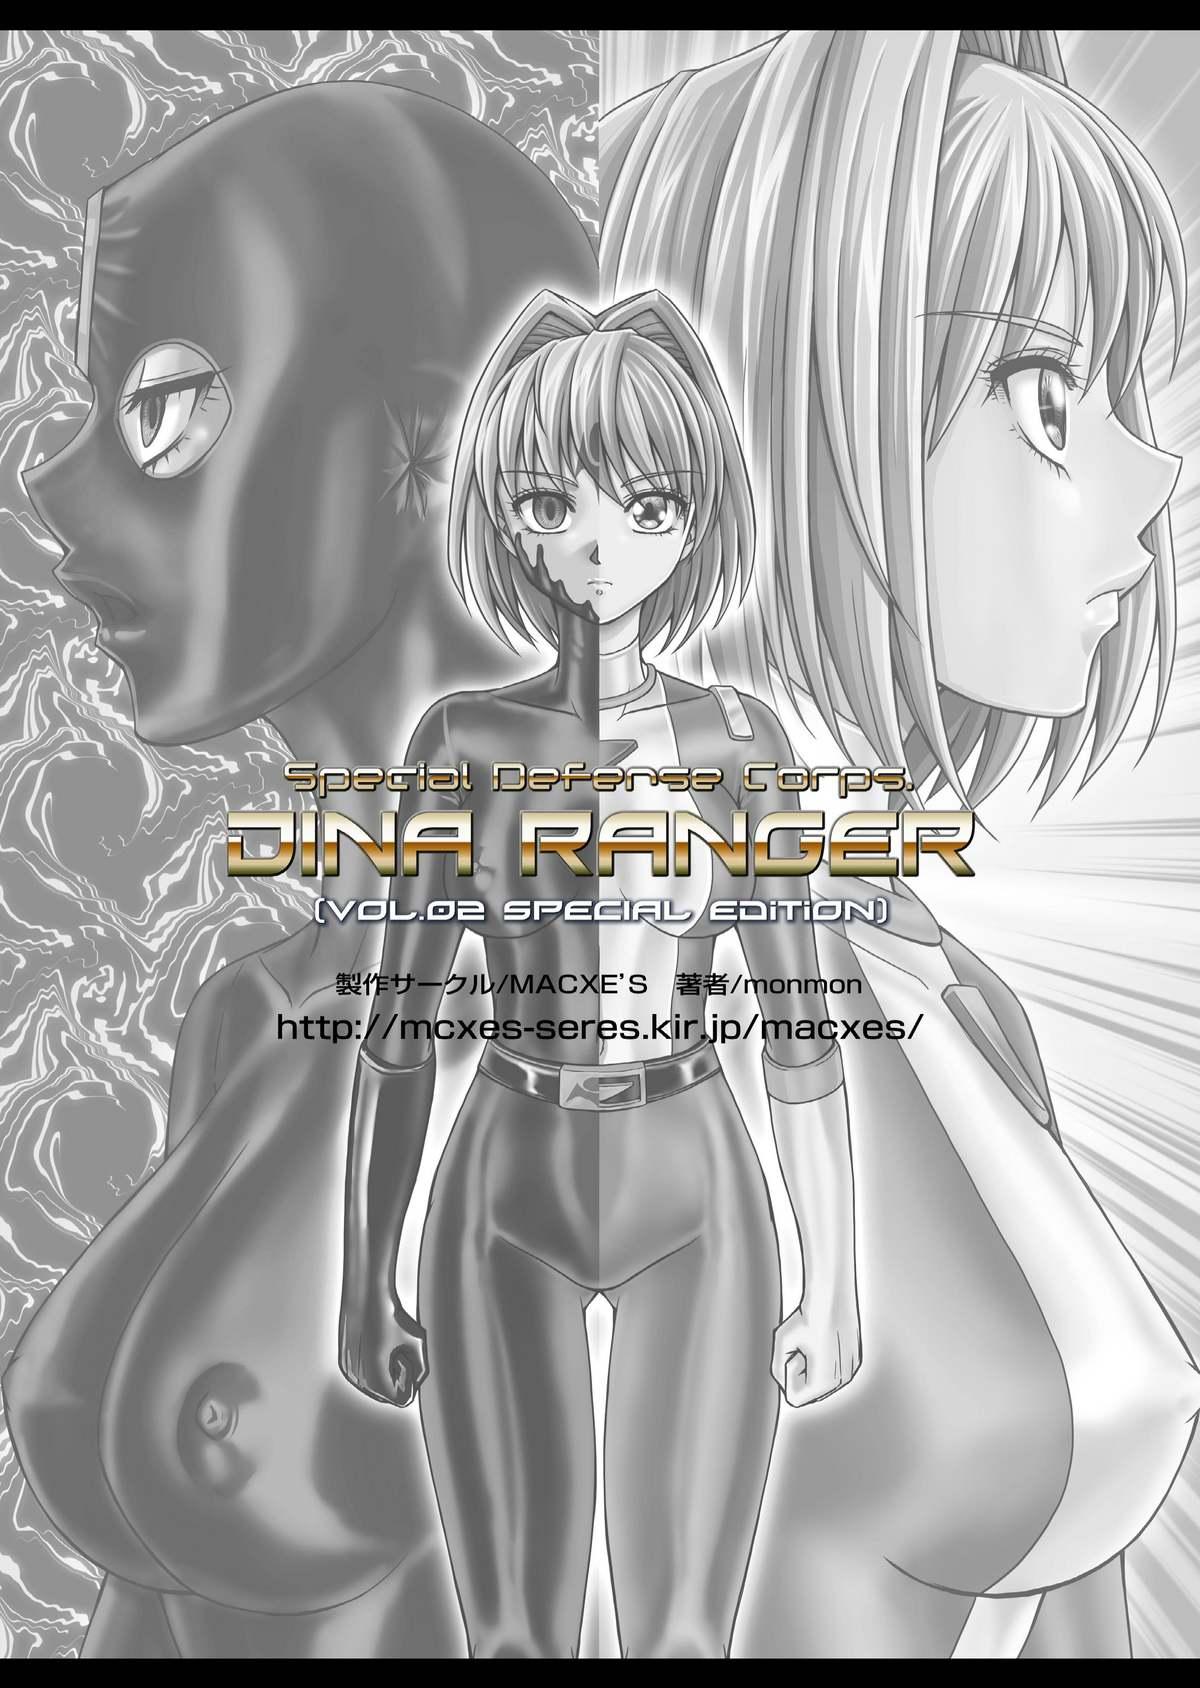 Tokubou Sentai Dina Ranger "Vol.2 Special Edition" 28